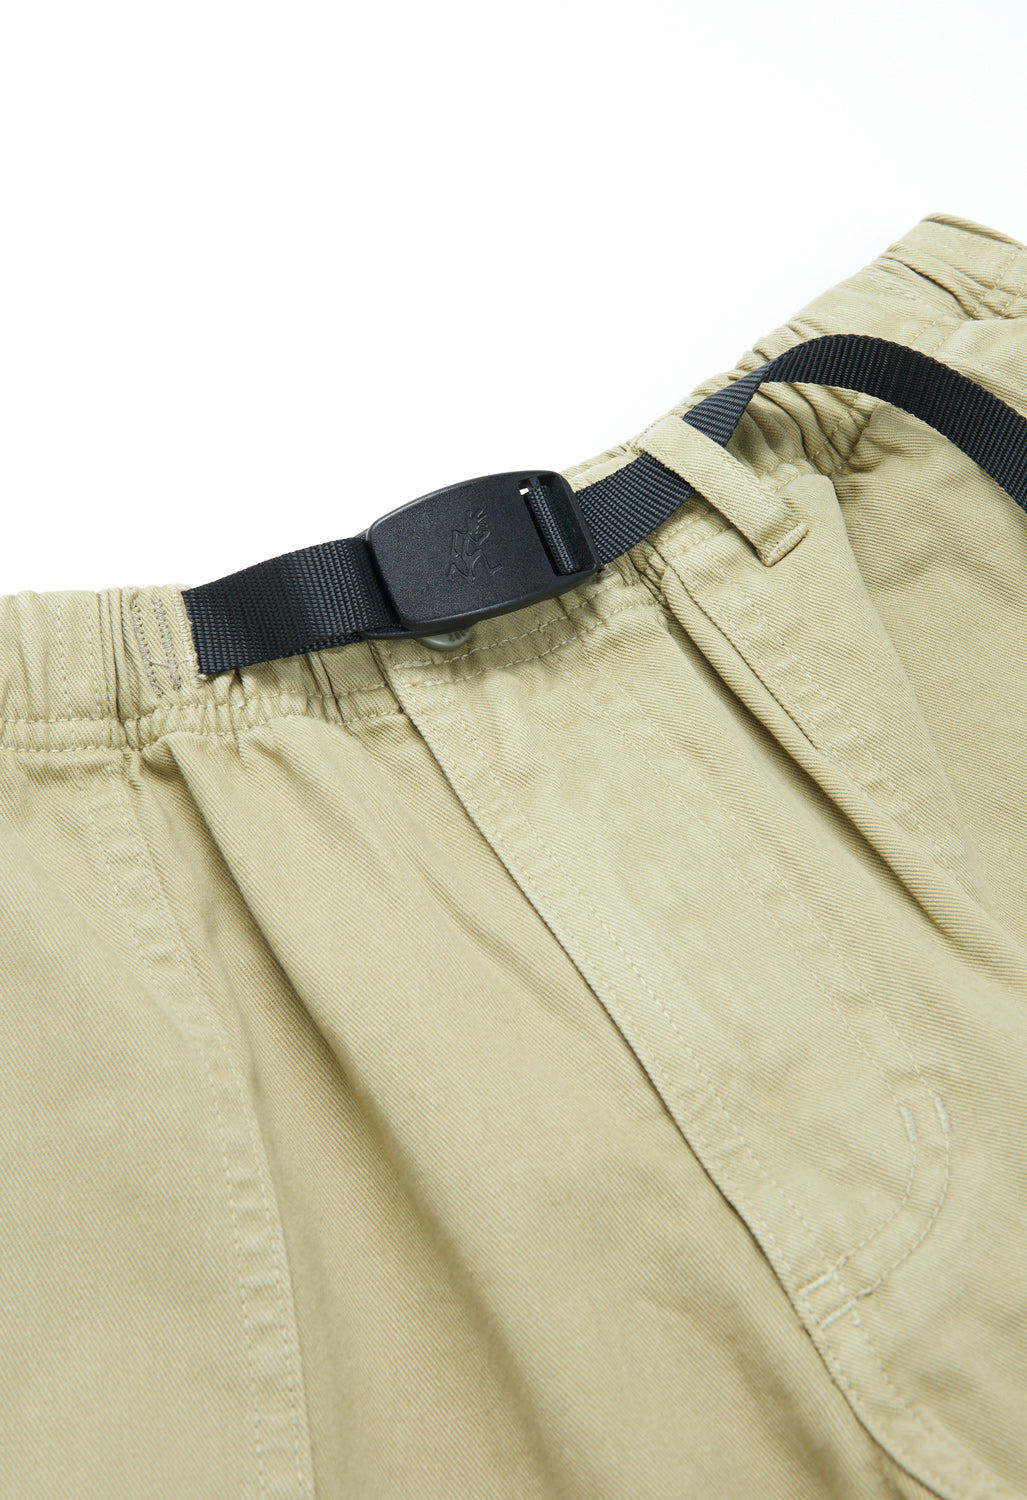 Gramicci Men's Ridge Shorts - Faded Olive